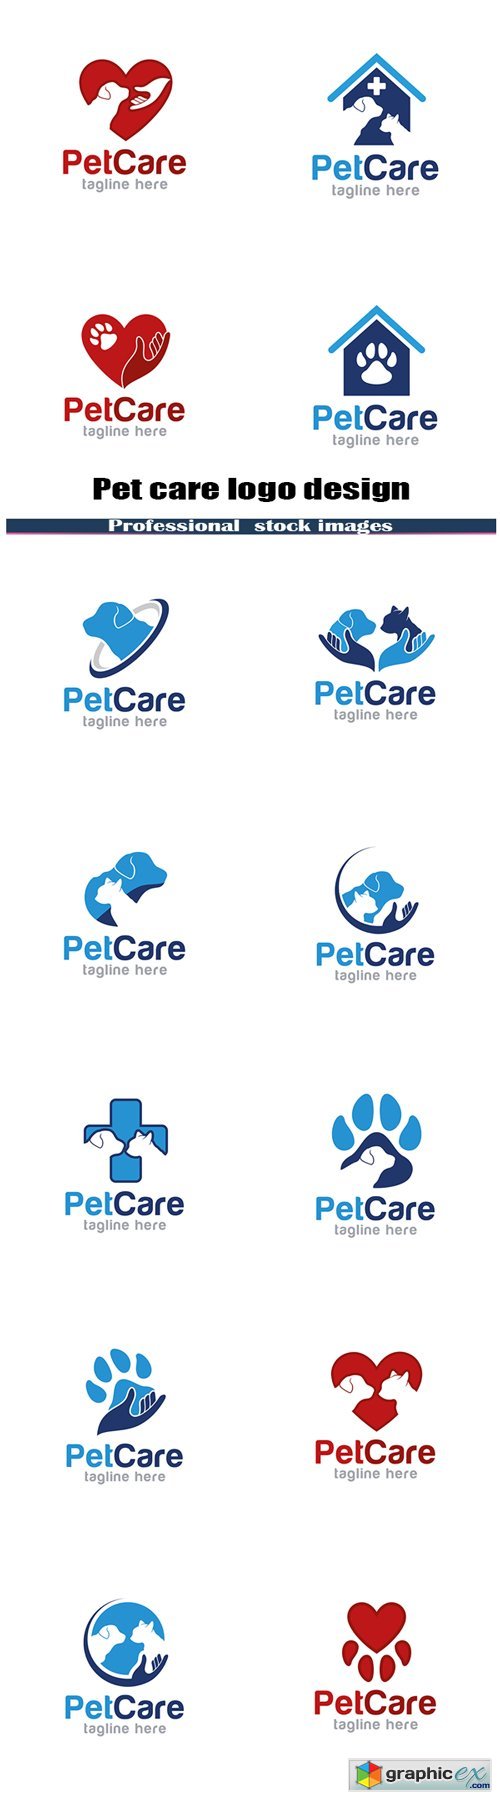 Pet care logo design